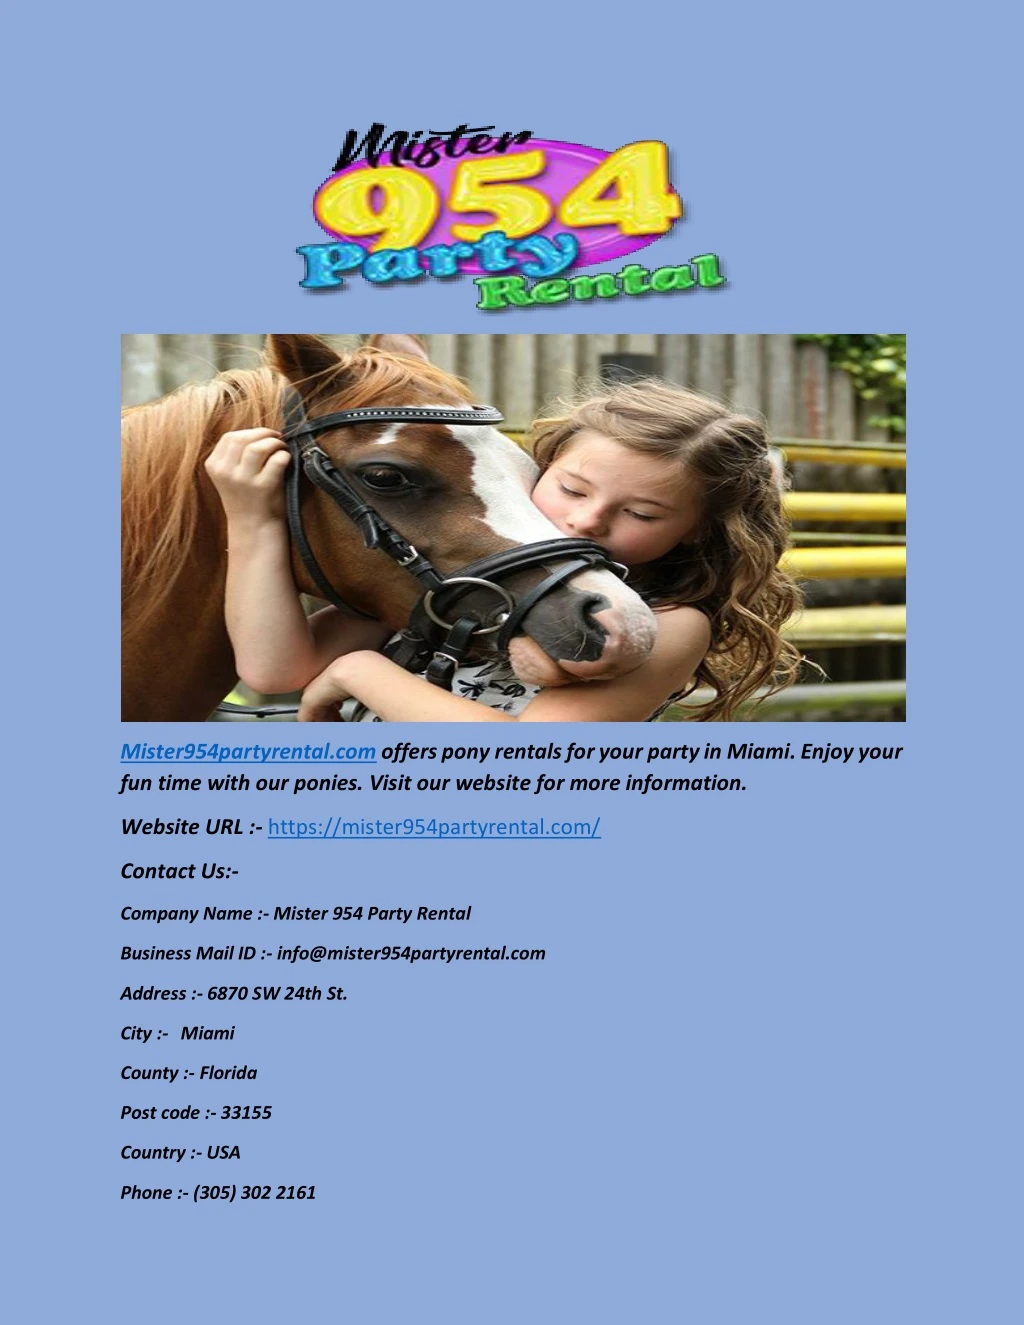 mister954partyrental com offers pony rentals